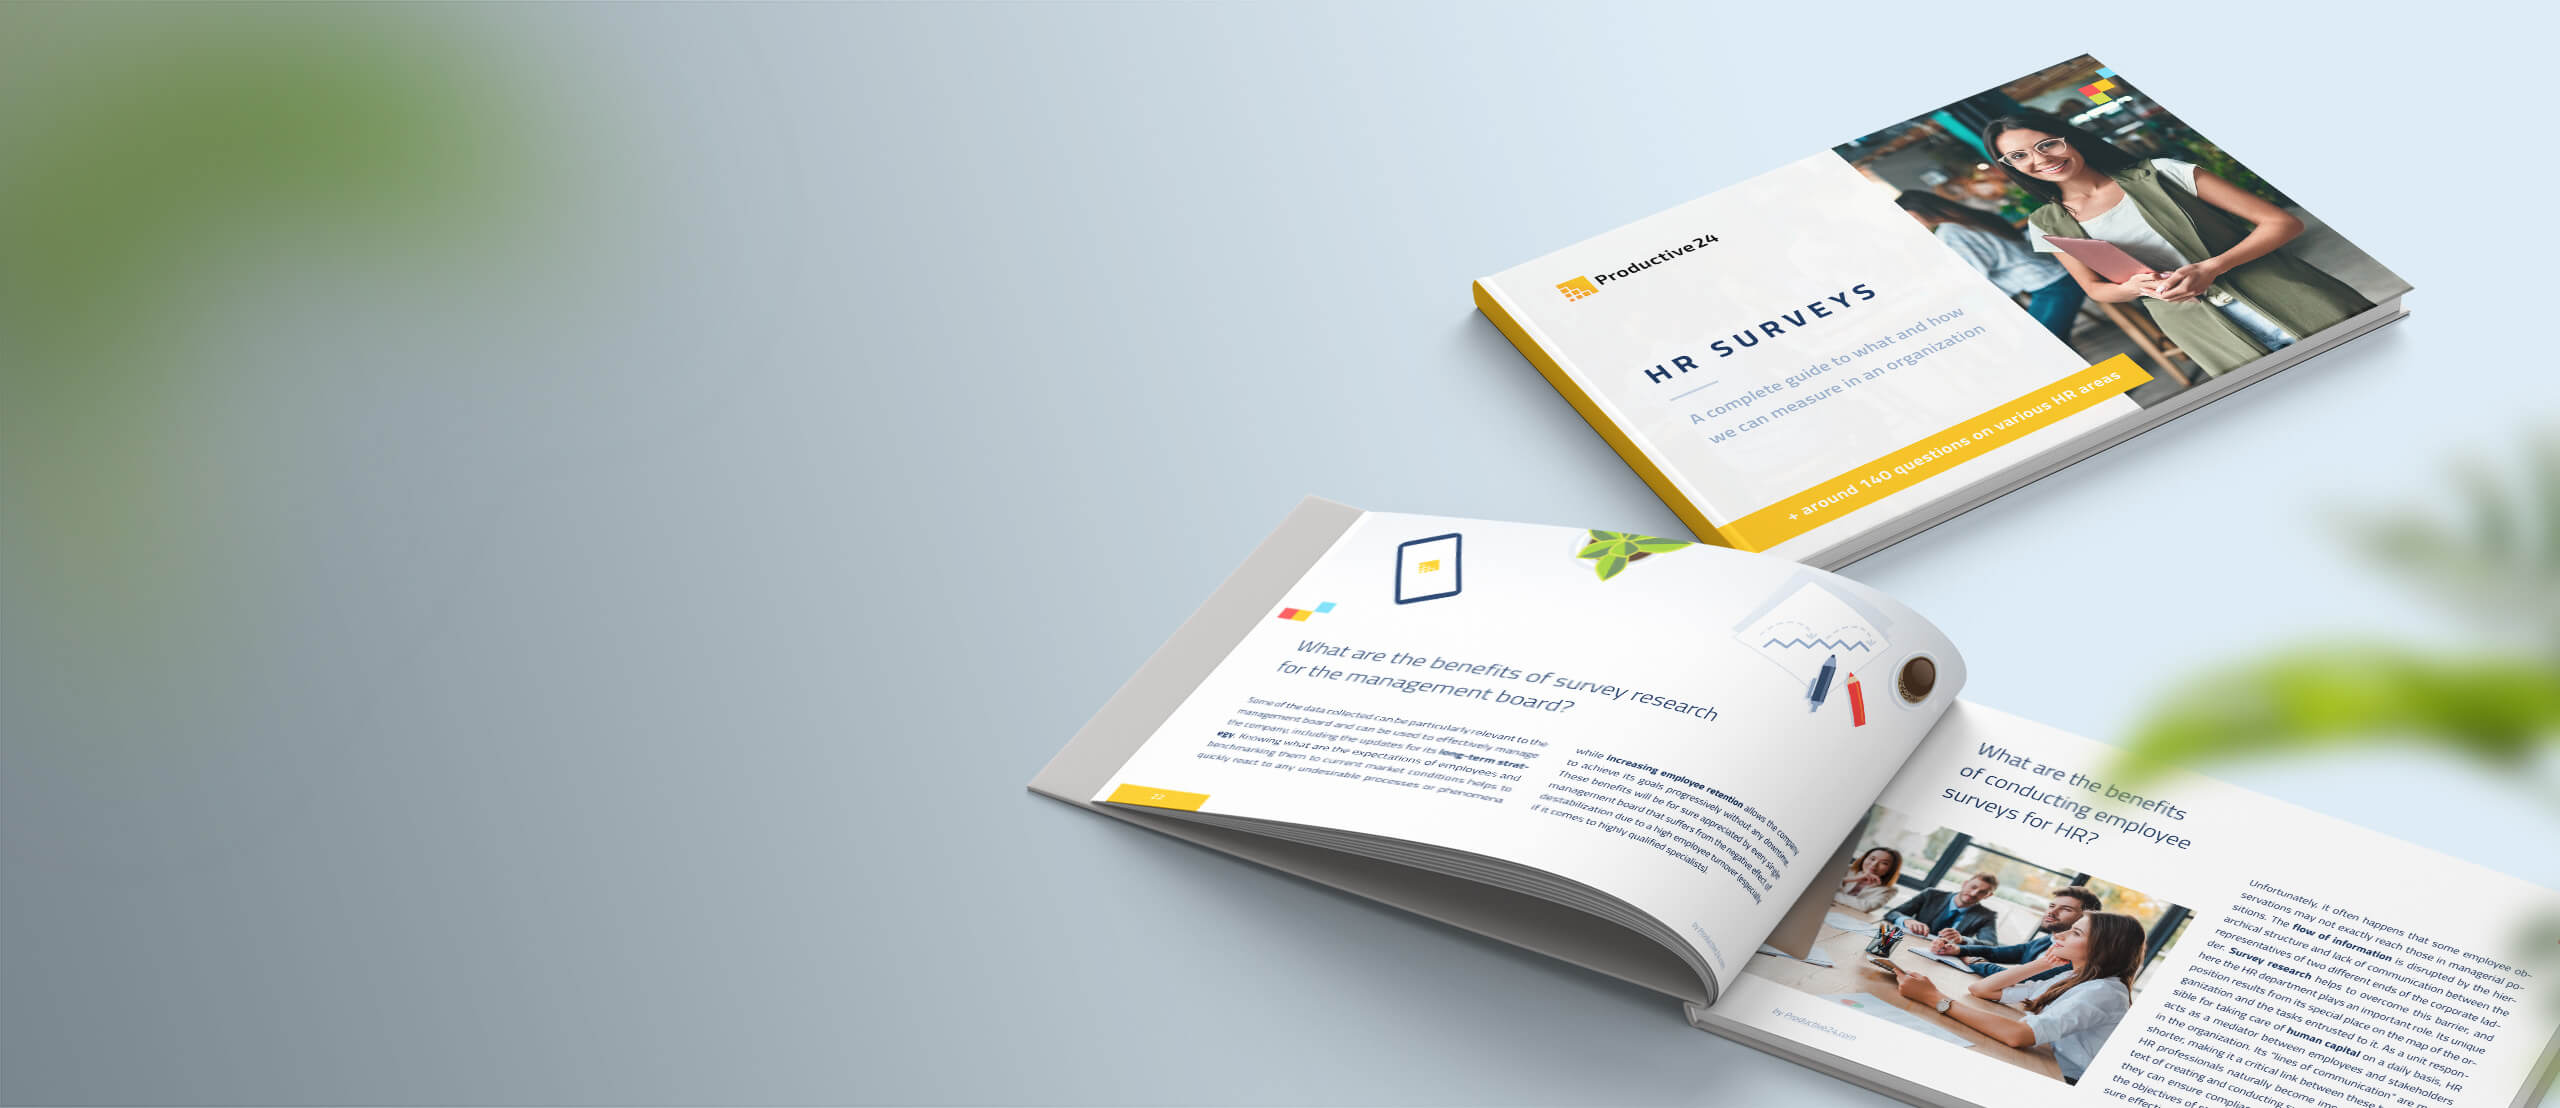 Our latest e-book ‘’HR surveys” is now available!